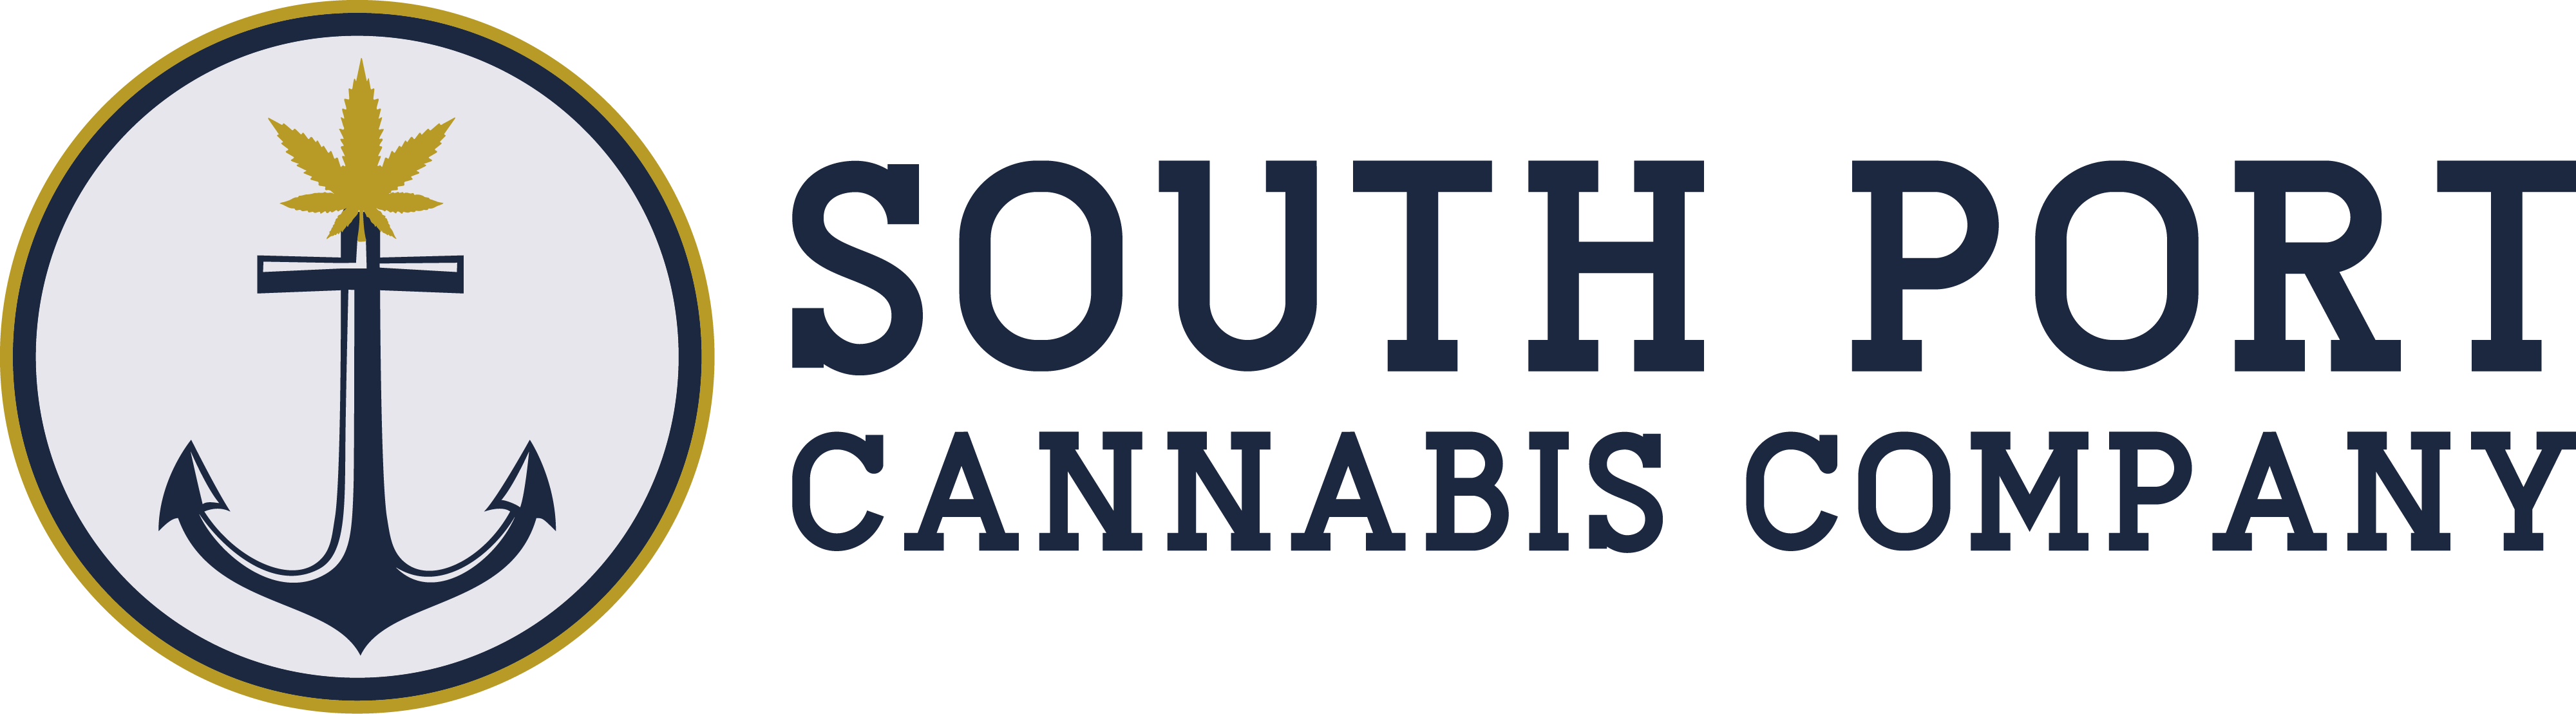 South Port Cannabis Company banner